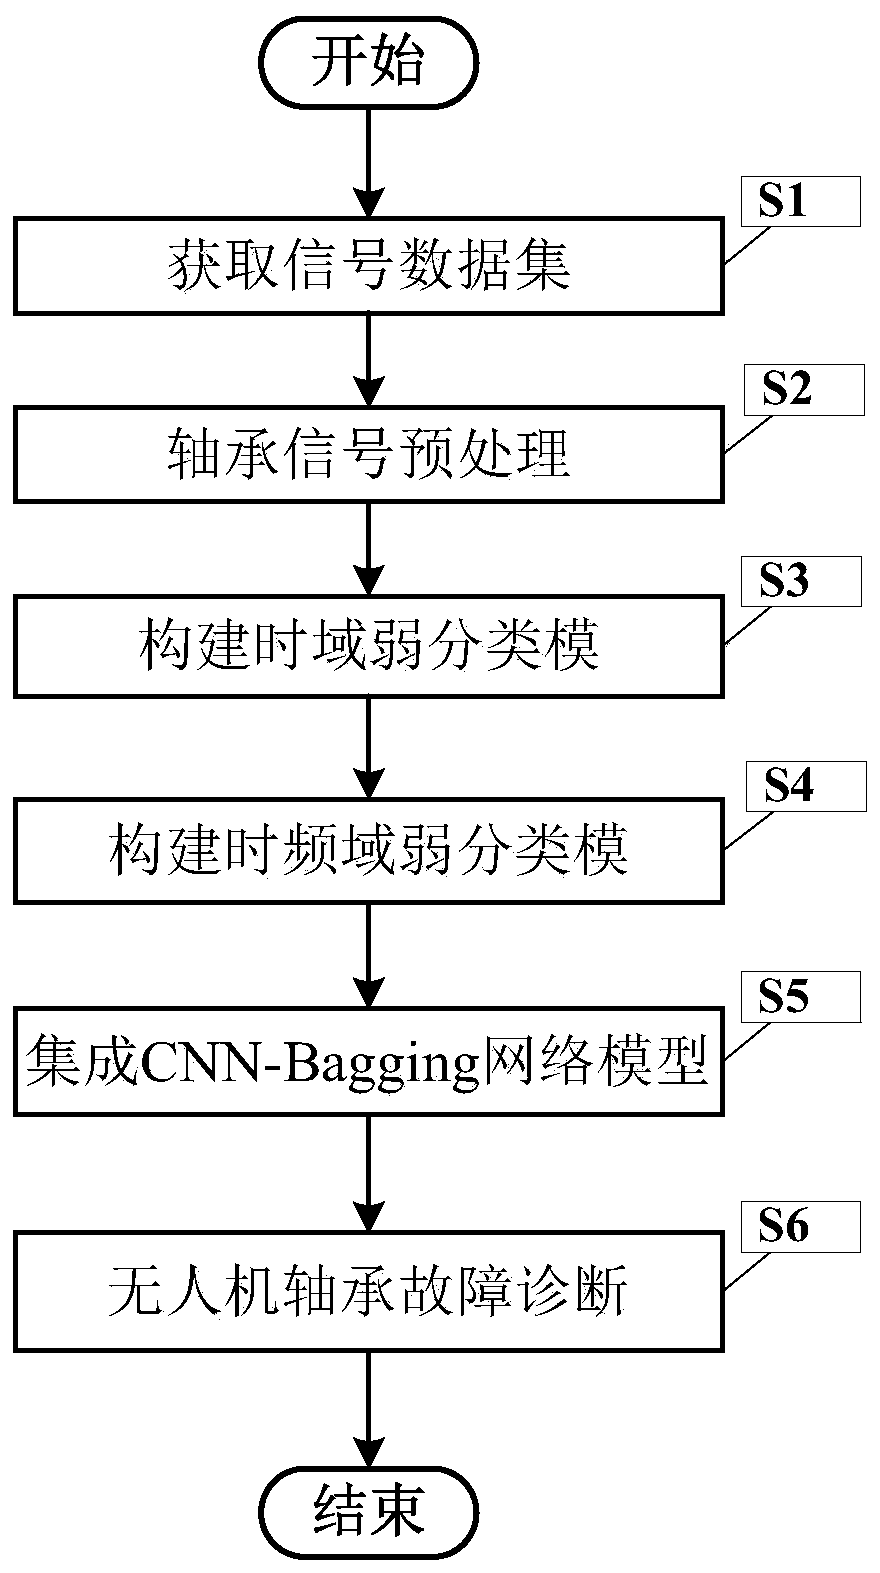 CNN-Bagging-based fault diagnosis method for UAV bearing